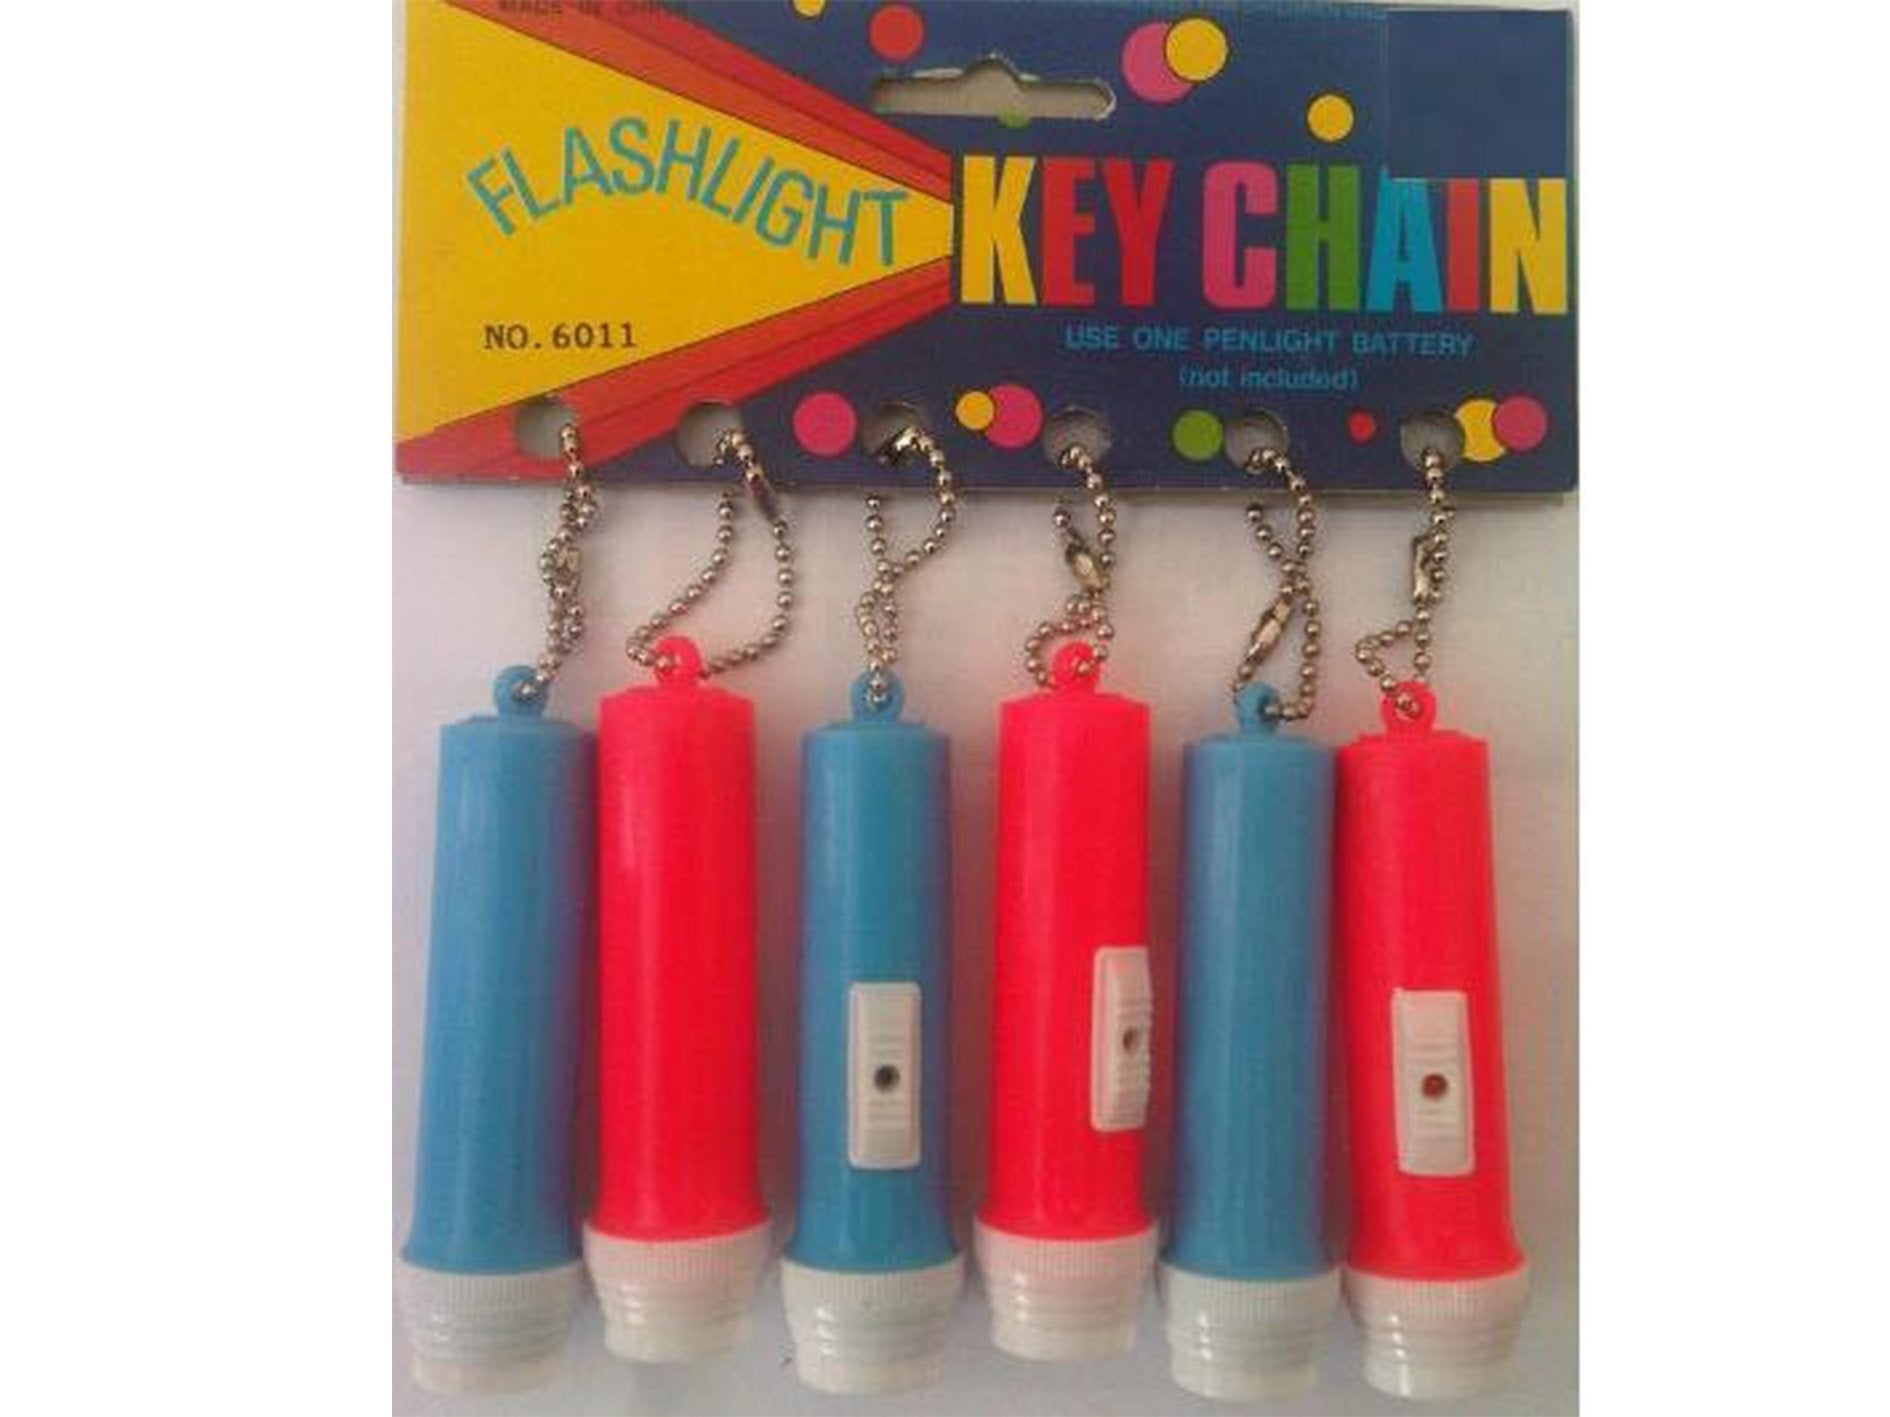 Key Chain Flashlight (6 Pack) REF 6011 - VIR Wholesale